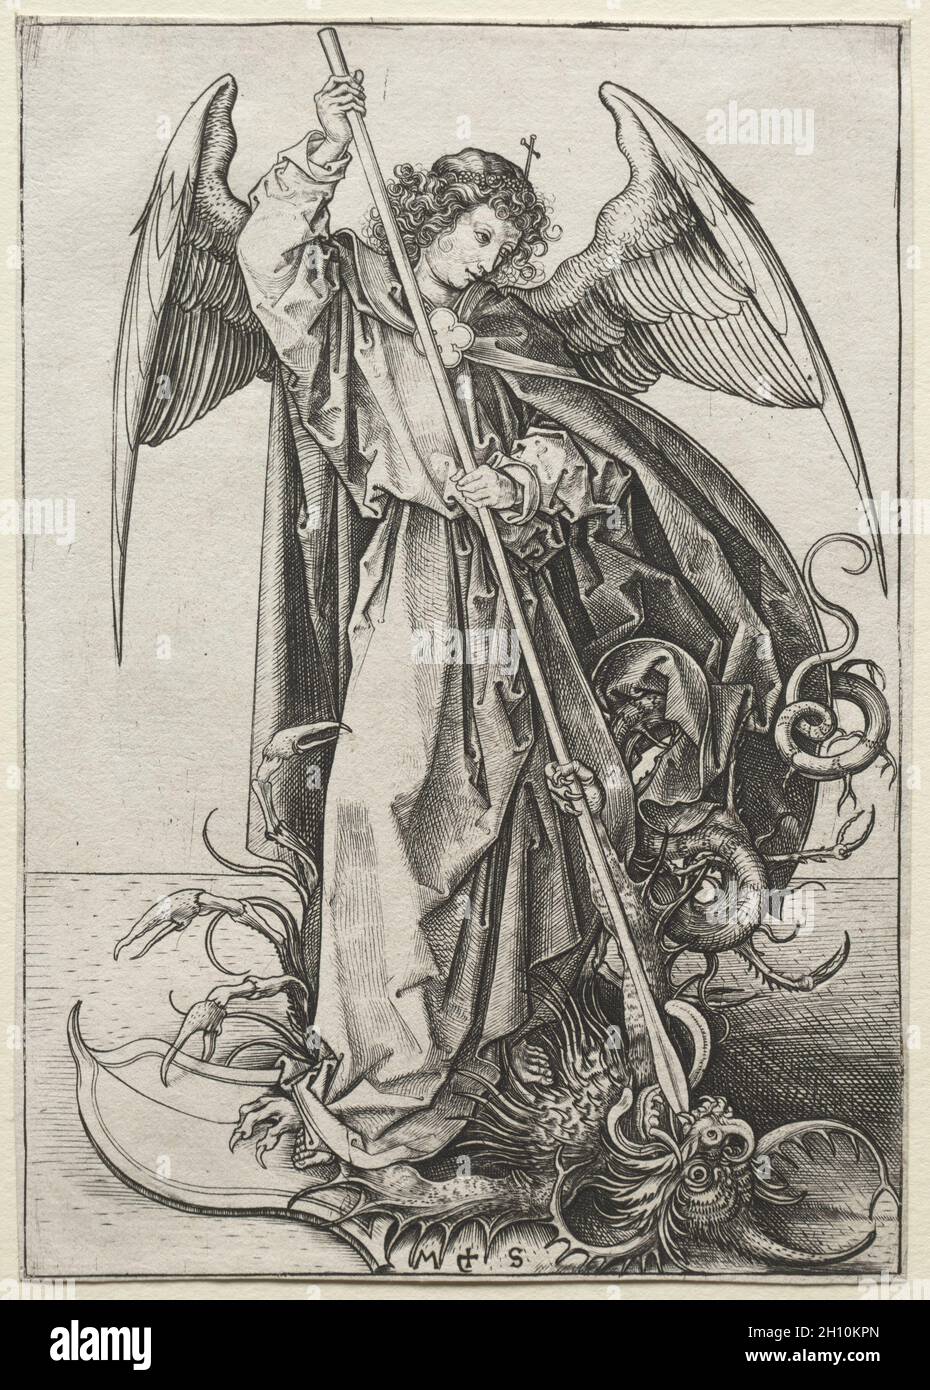 The Archangel Michael Piercing the Dragon, c. 1475. Martin Schongauer (German, c.1450-1491). Engraving; mat size: 49 x 36.3 cm (19 5/16 x 14 5/16 in.); platemark: 16.2 x 11.5 cm (6 3/8 x 4 1/2 in.). Stock Photo